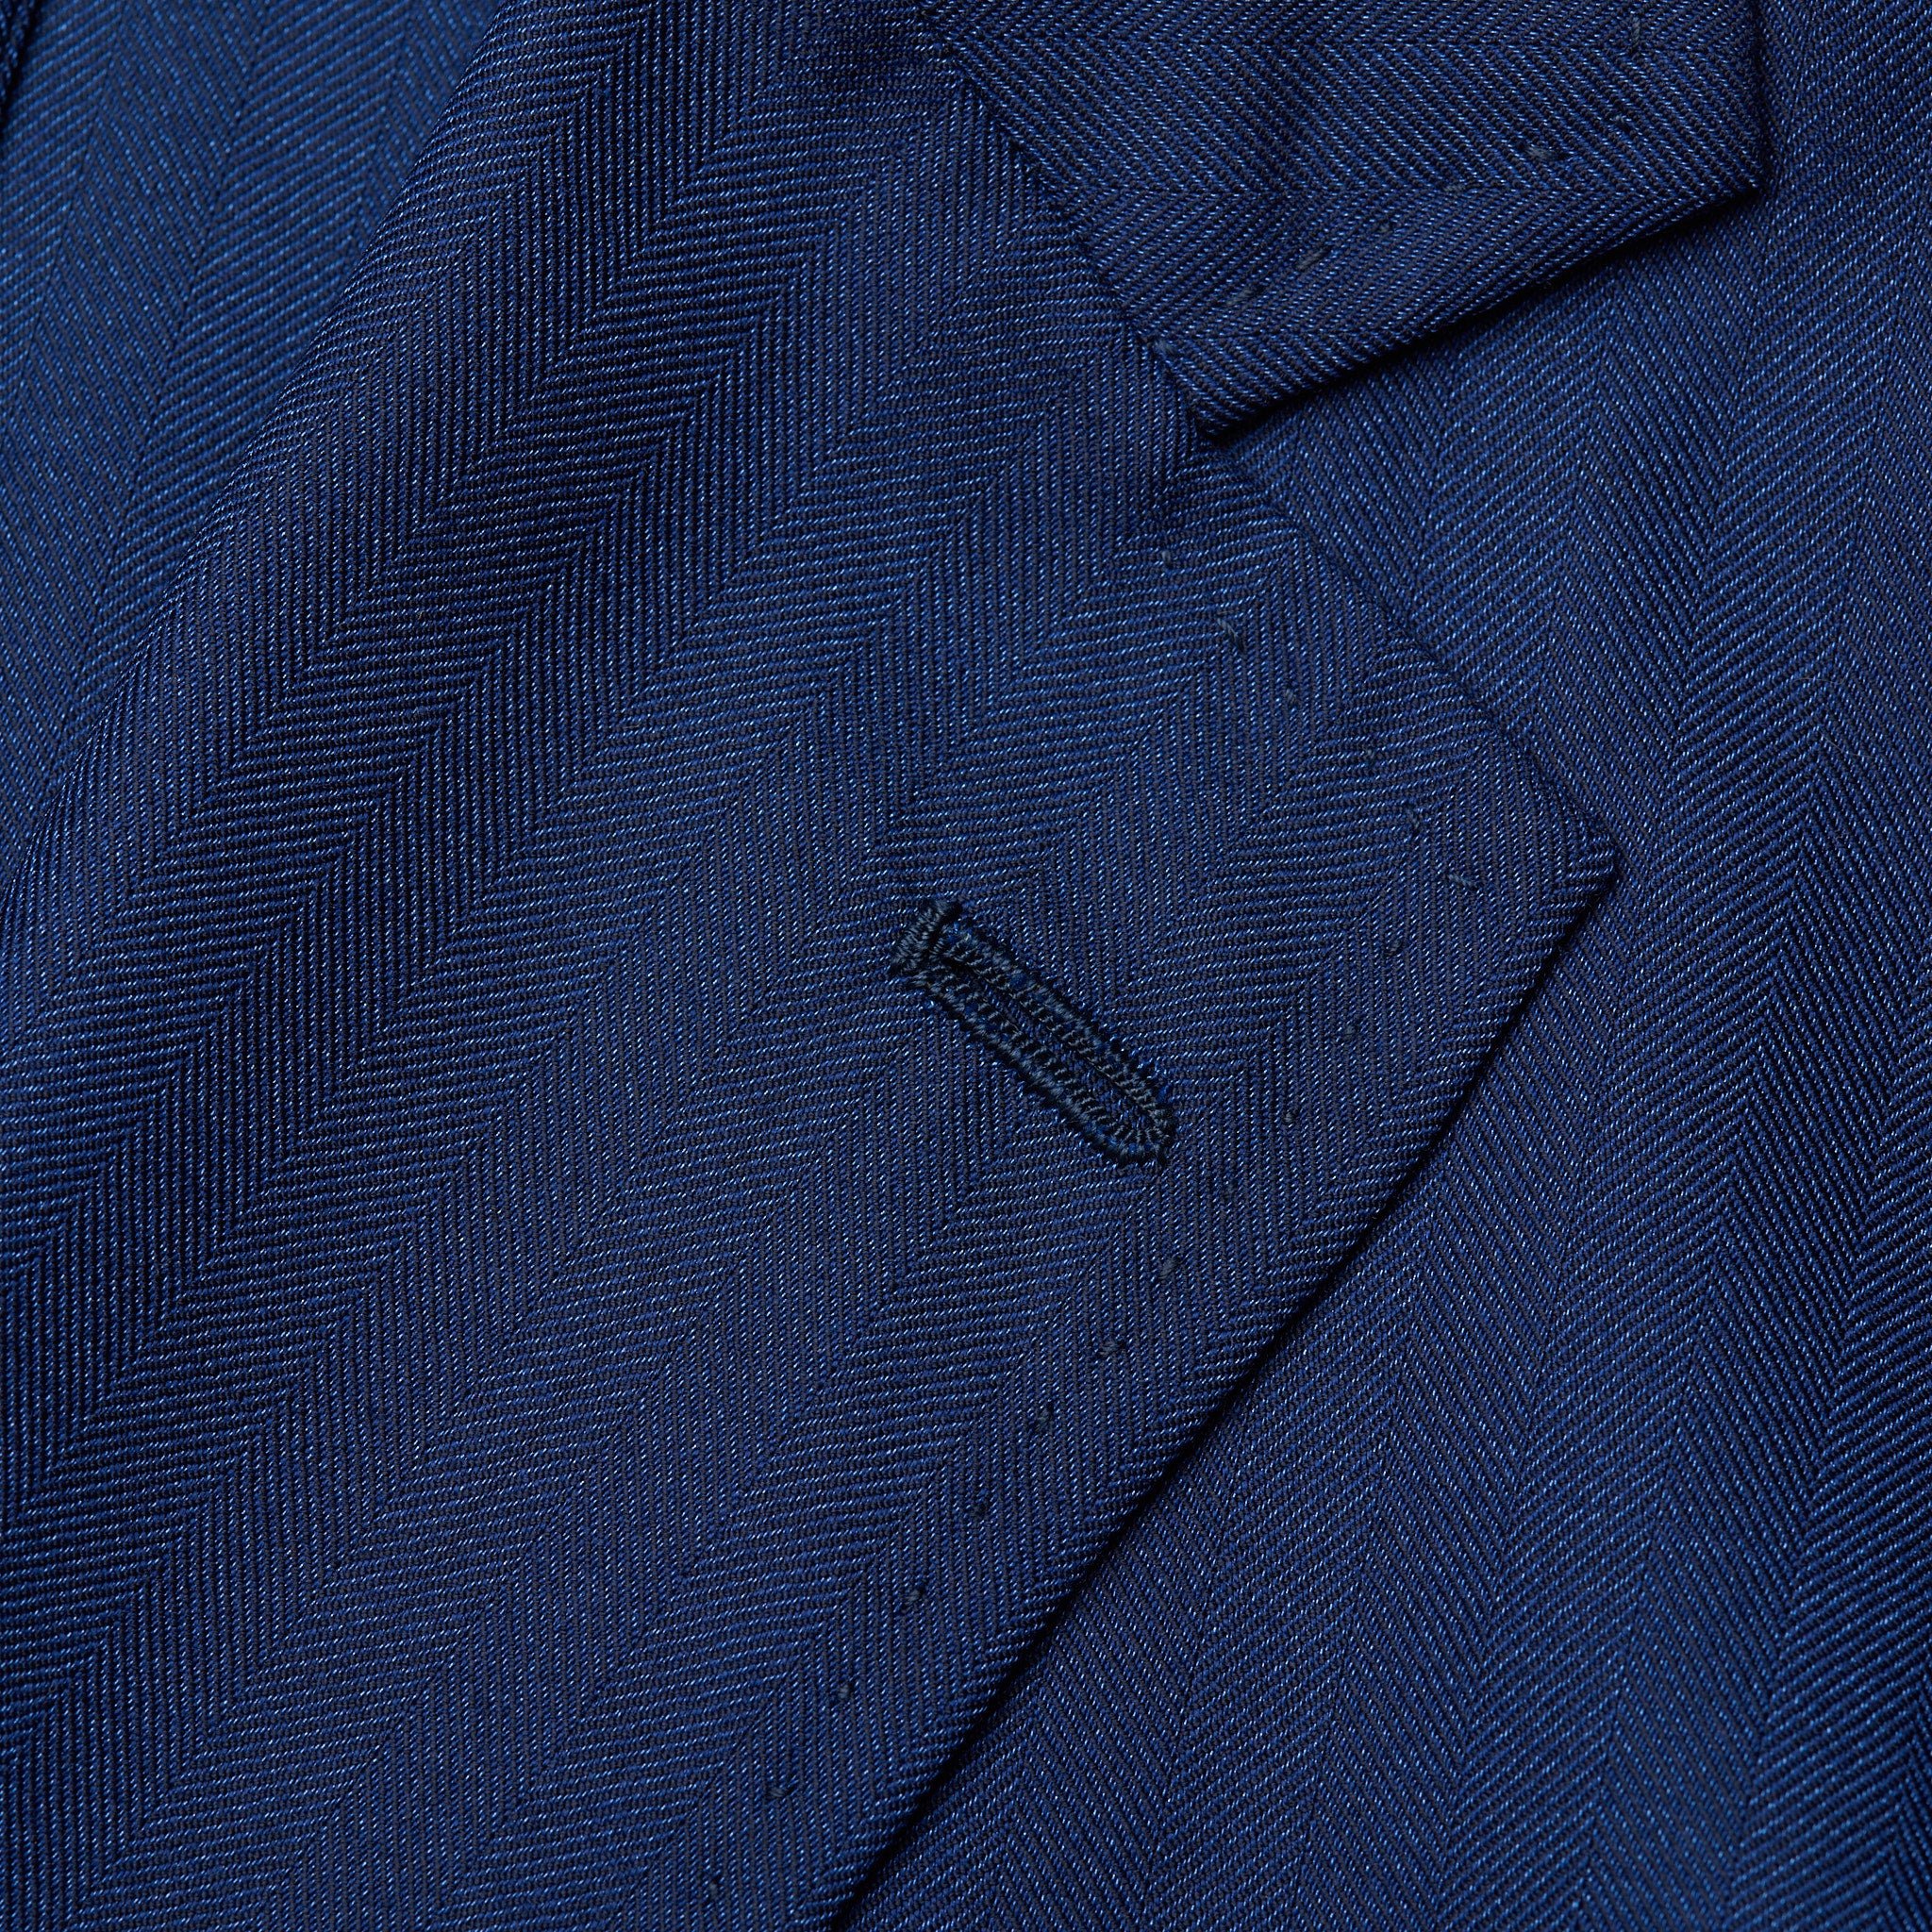 MICHELE NEGRI "Brillante" Blue Herringbone Wool-Silk Unconstructed Jacket 48/38 MICHELE NEGRI